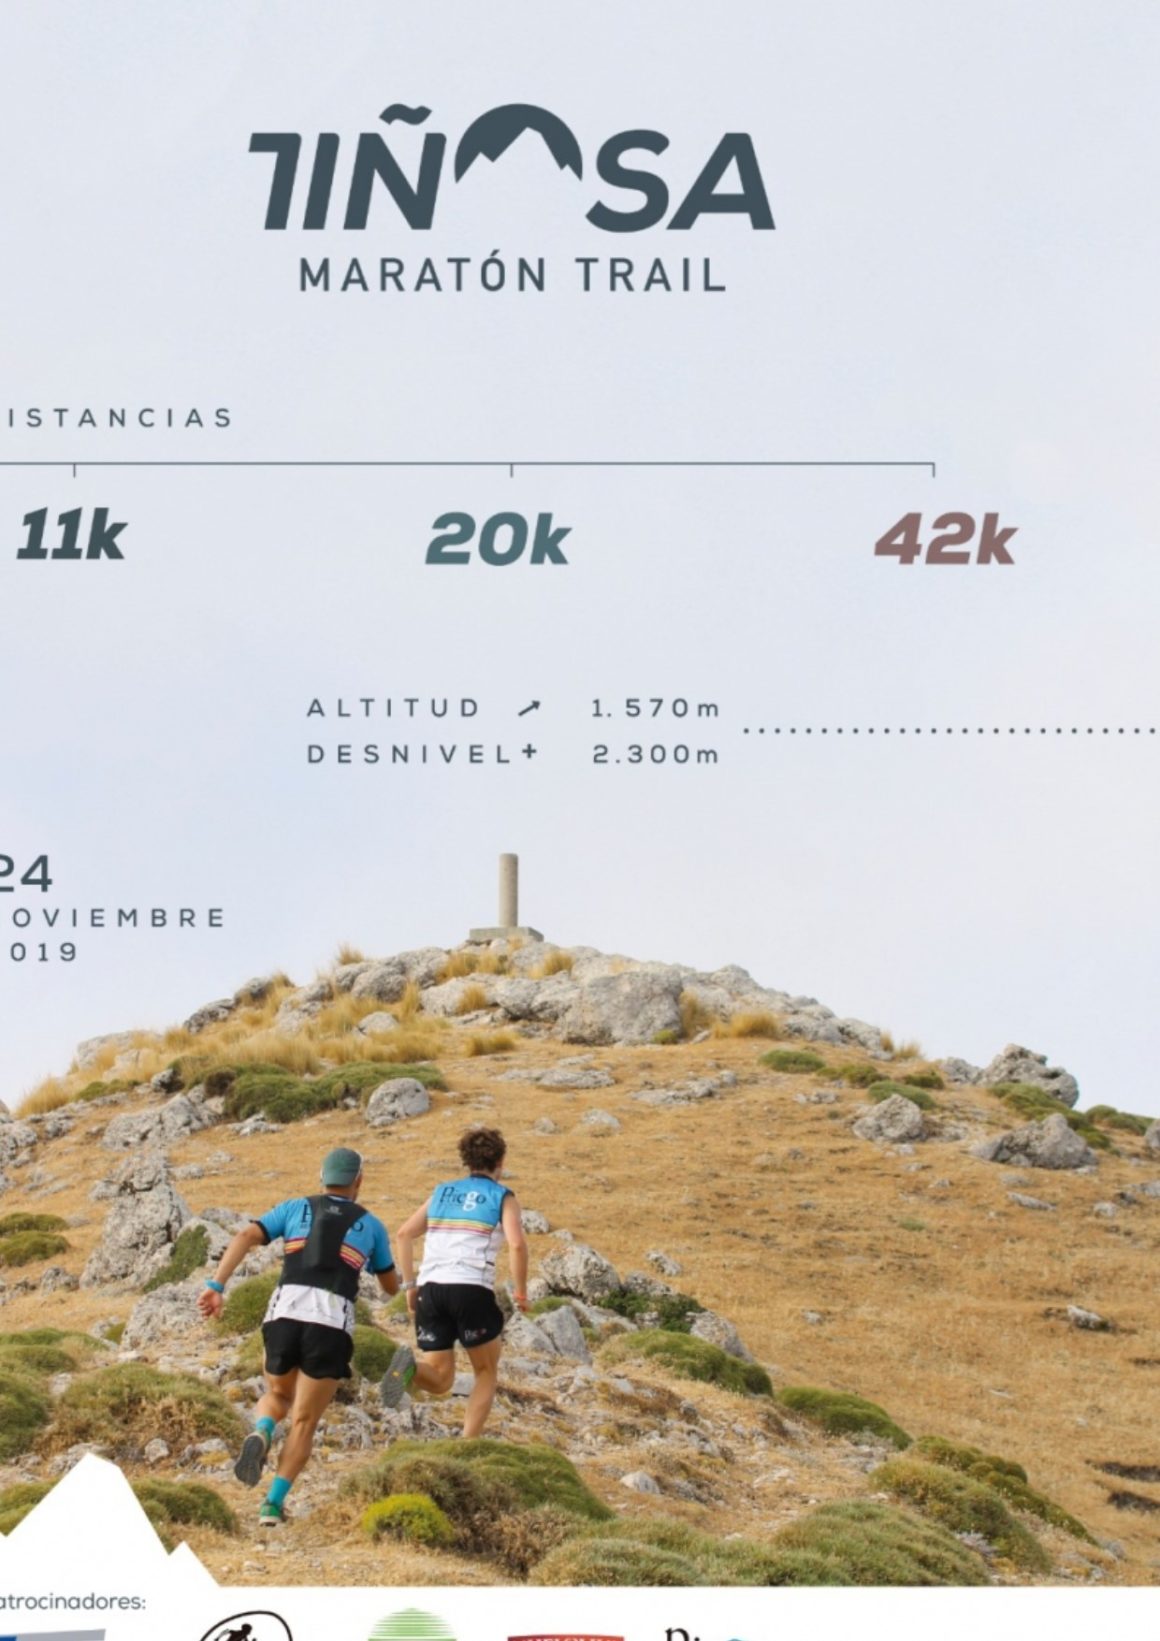 Maratón-Trail Tiñosa